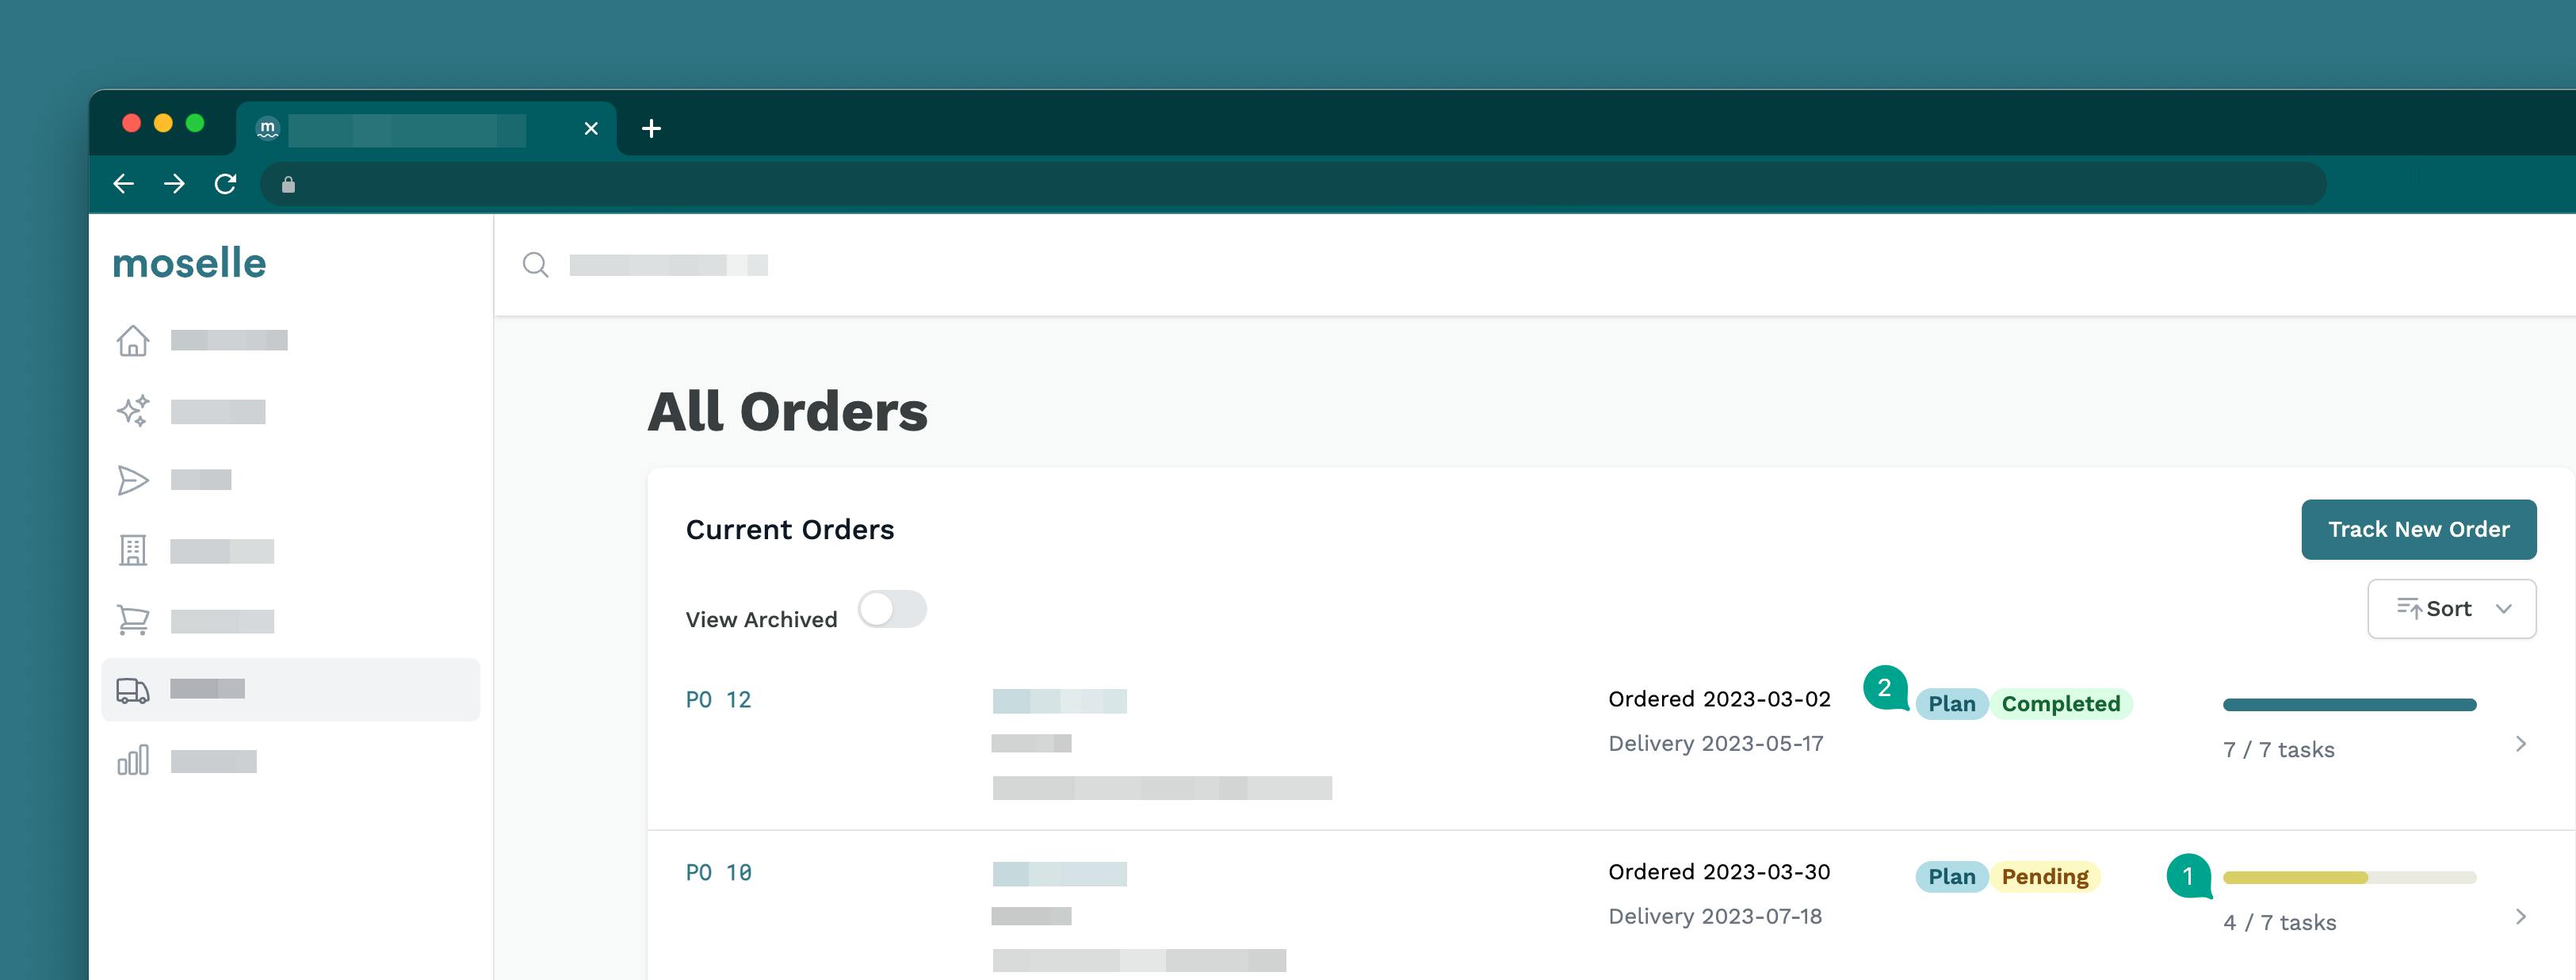 Order management with progress indicators and status updates.